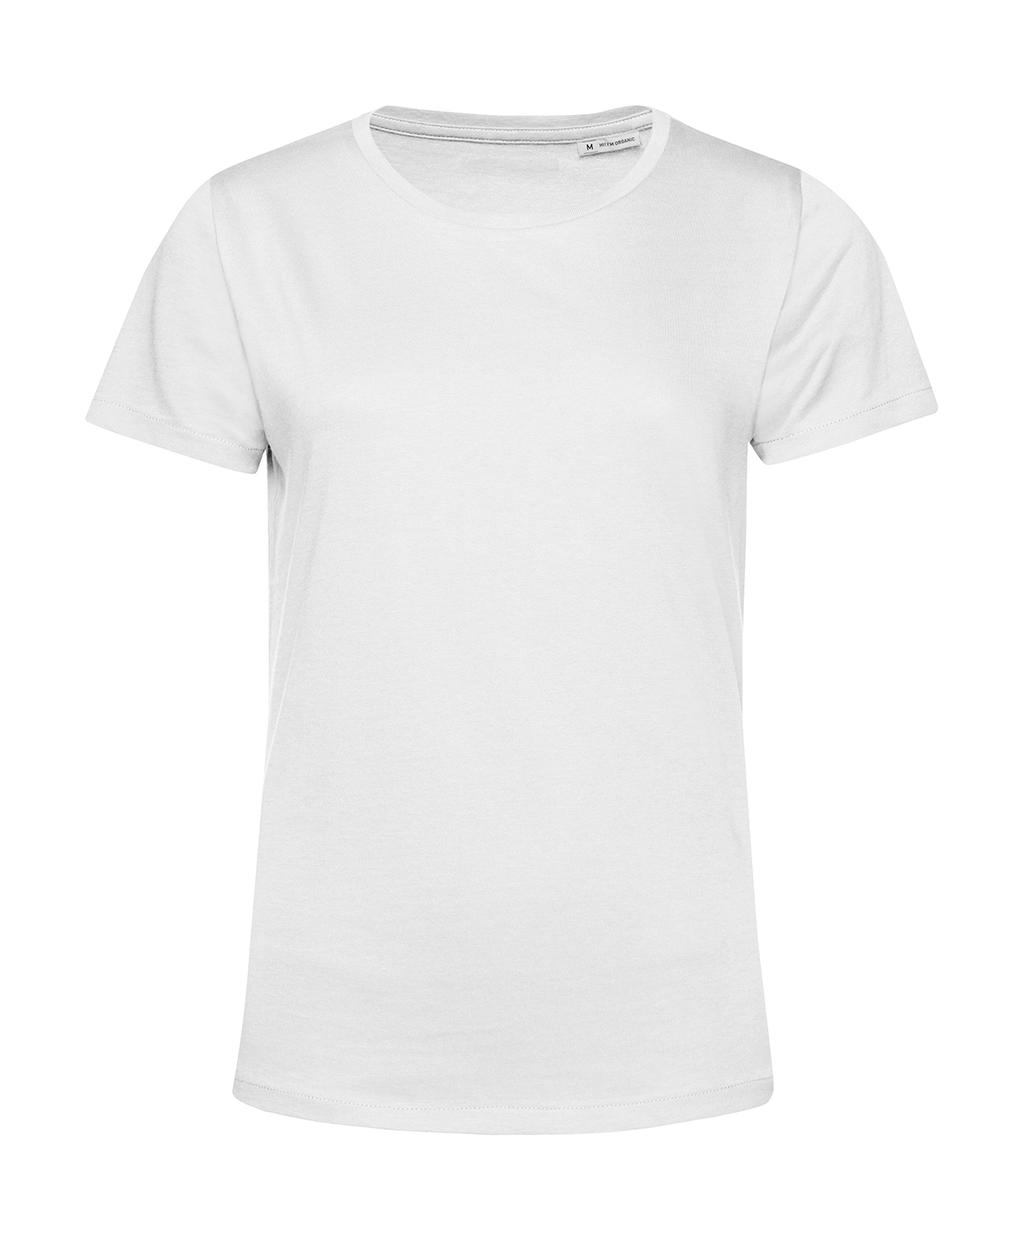 Tričko dámské BC Organic Inspire E150 - bílé, XS